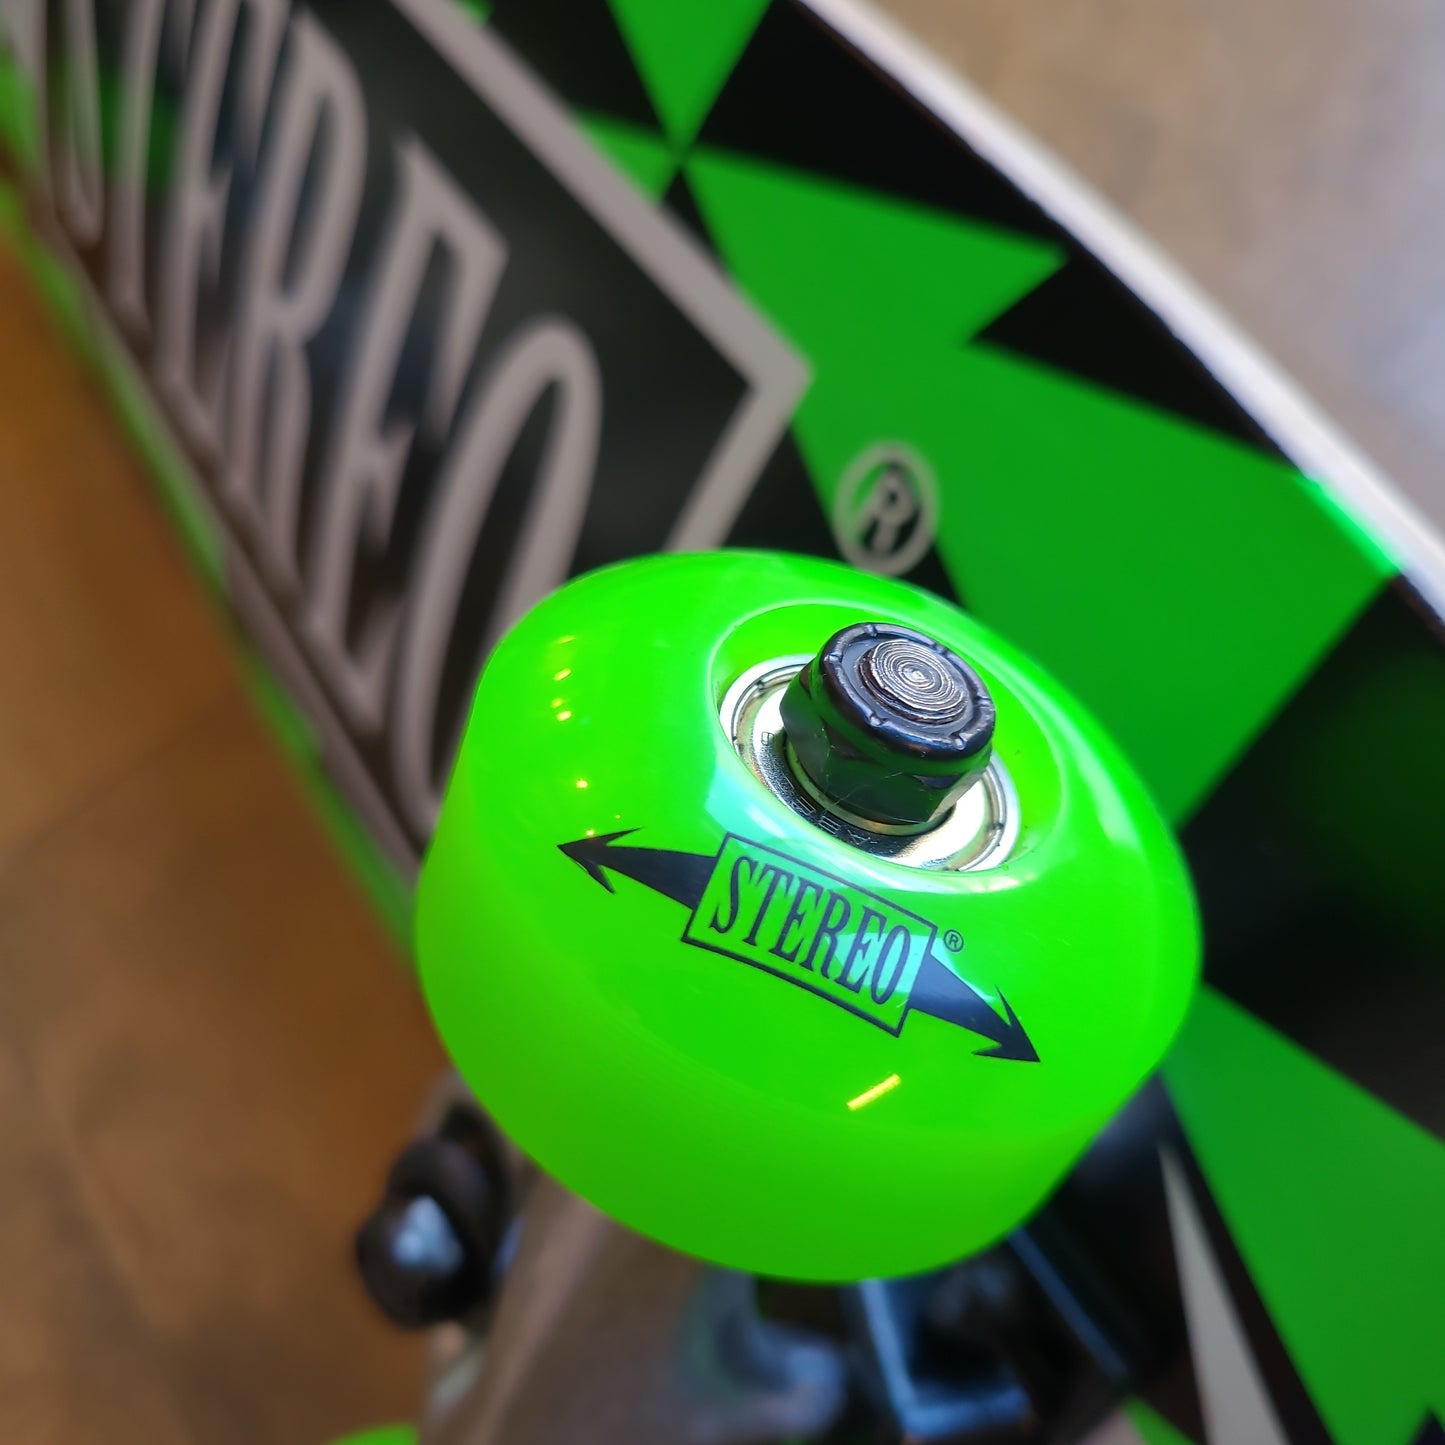 Stereo - Green Arrow 8.25" Complete Skateboard